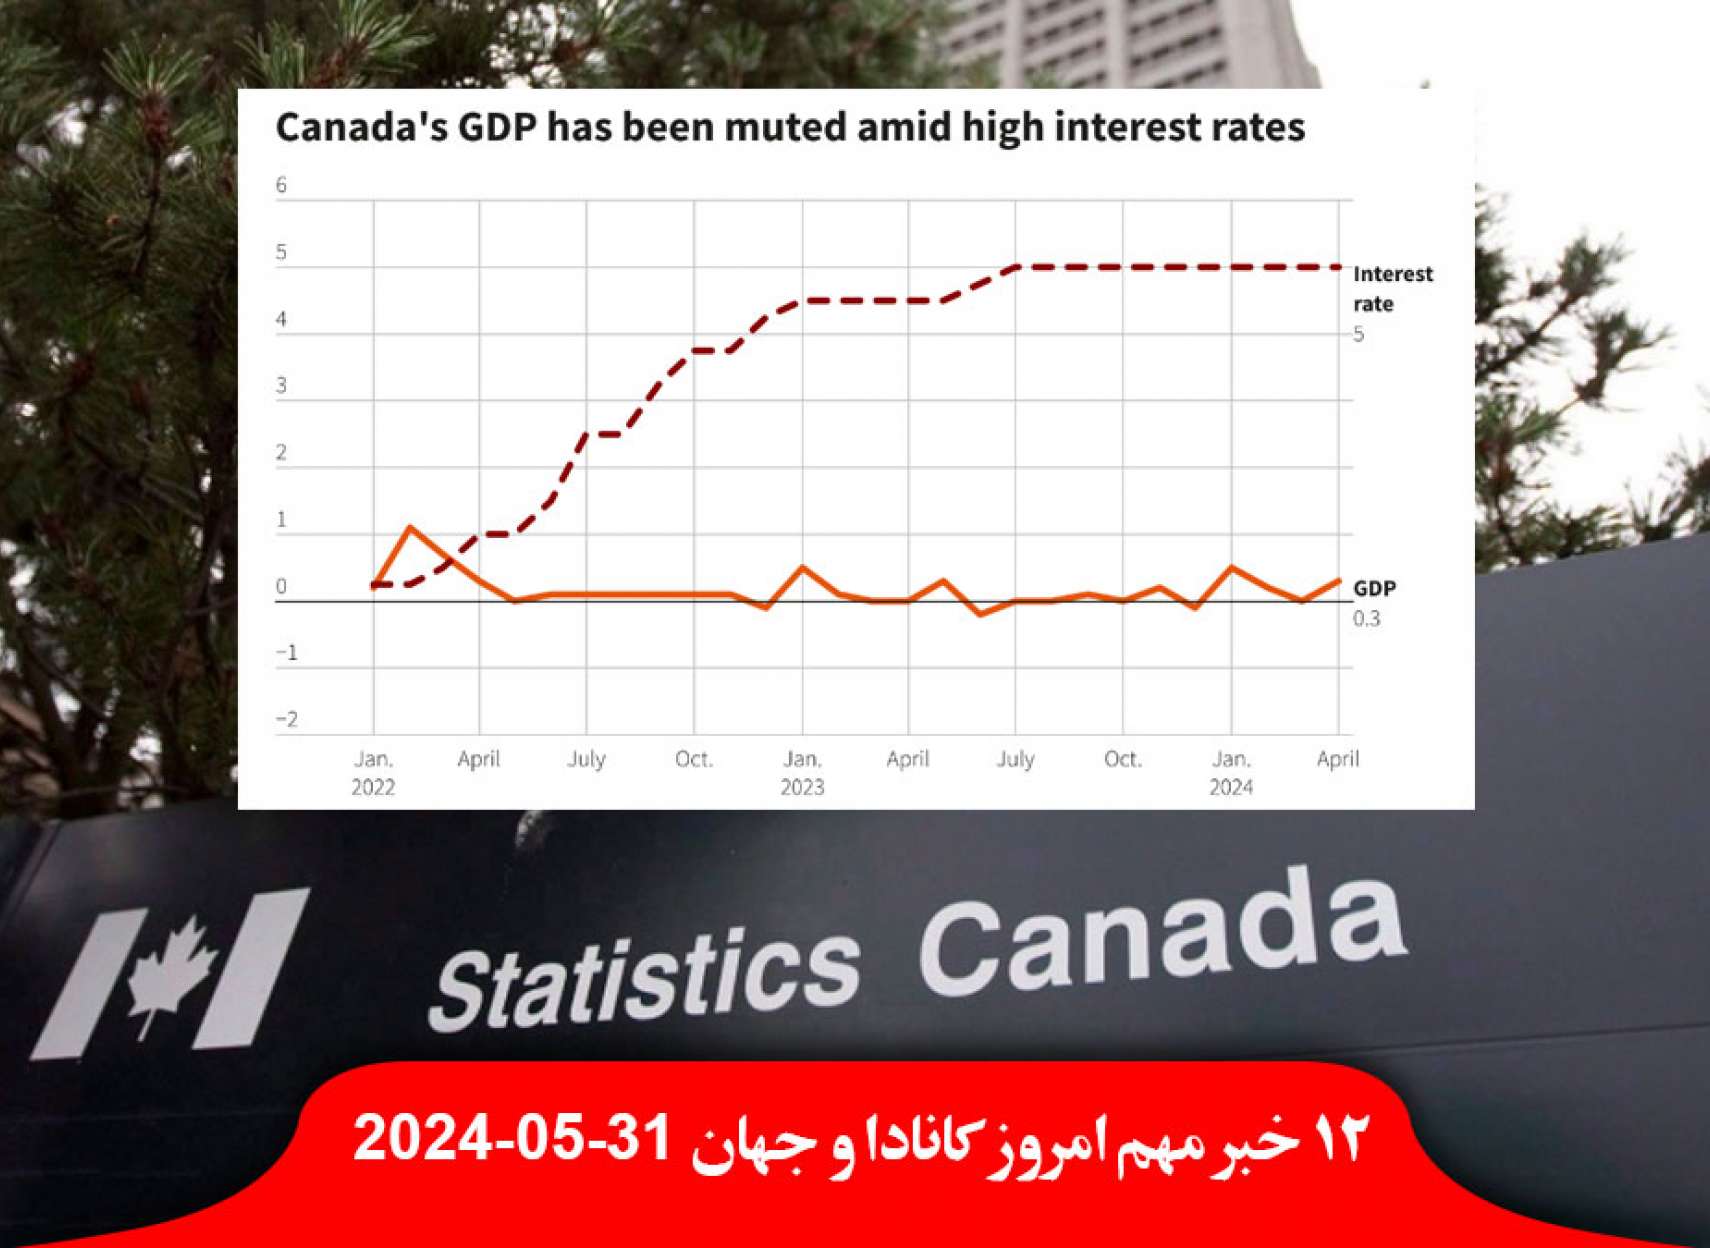 کاهش-رشد-اقتصادی-کانادا-پایین-بهره-اپل-سیری-مجهز-هوش-مصنوعی-دانشگاه-سوئد-خالکوبی-سرطان-لنفوم